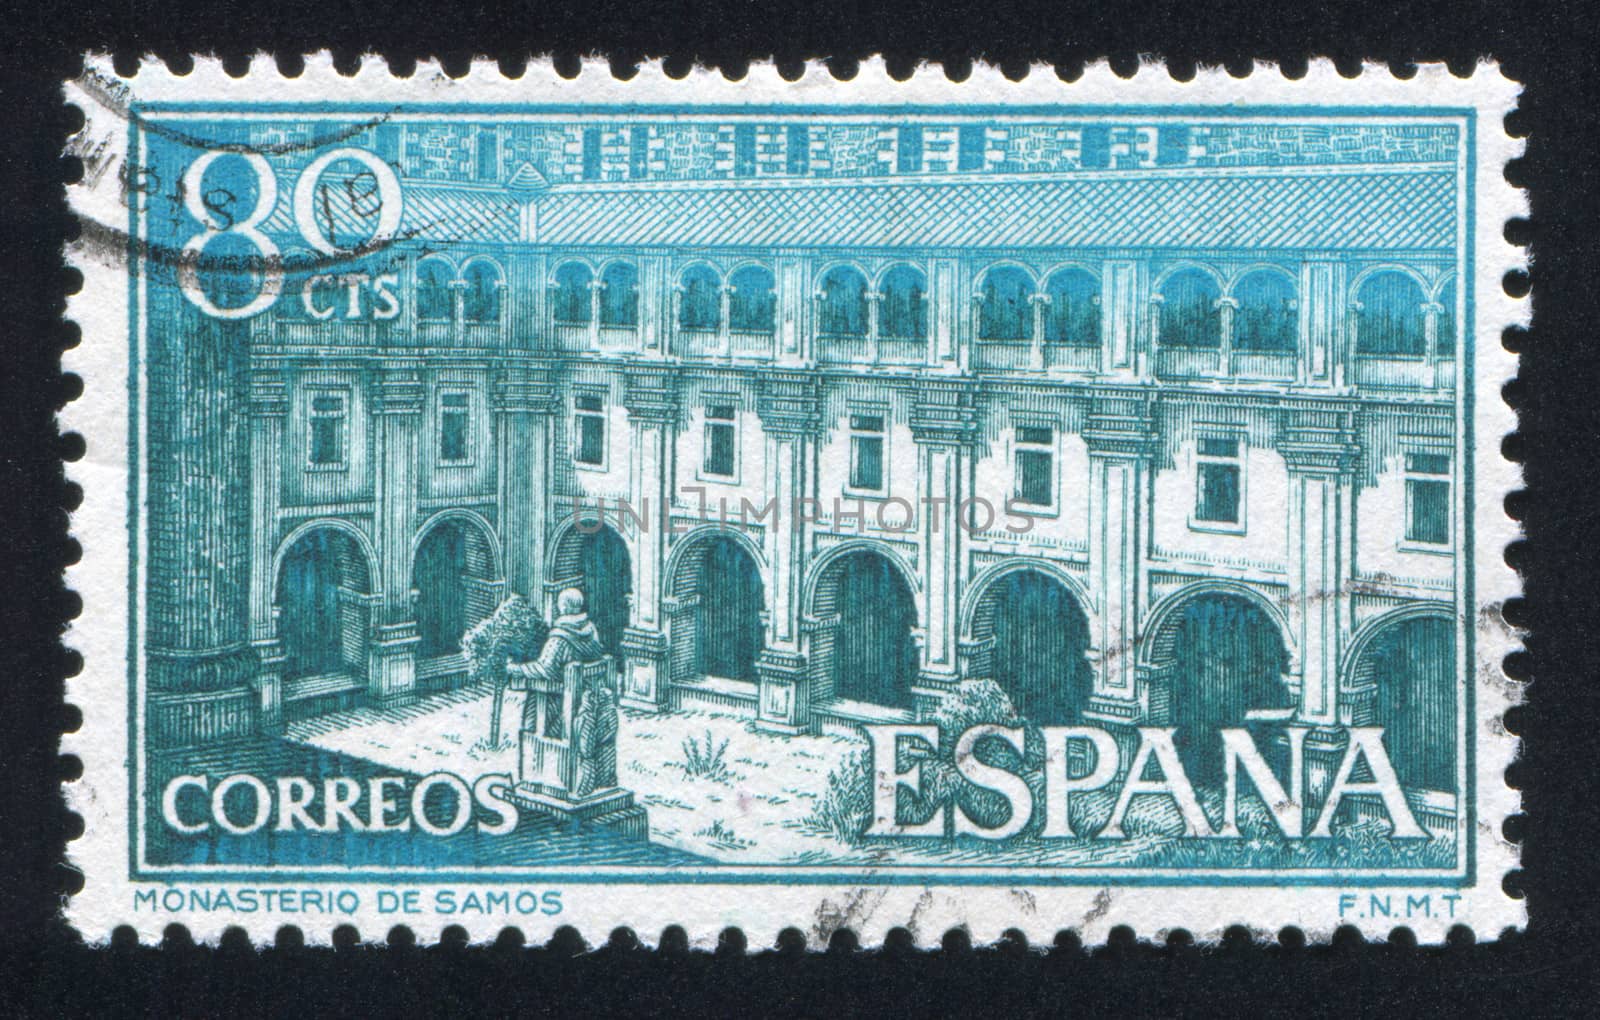 SPAIN - CIRCA 1960: stamp printed by Spain, shows Courtyard of Samos Monastery, circa 1960